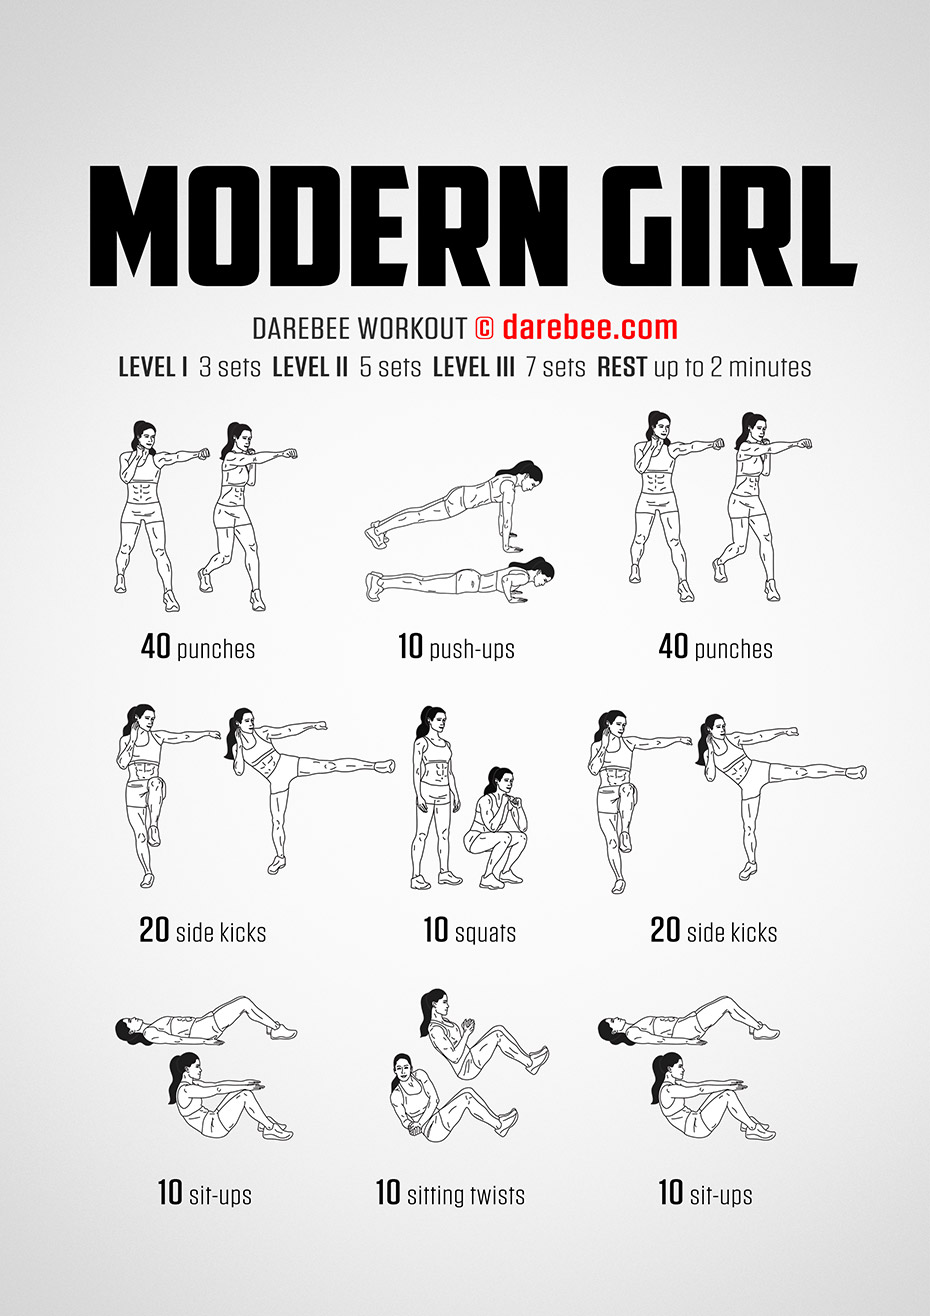 https://darebee.com/images/workouts/modern-girl-workout.jpg